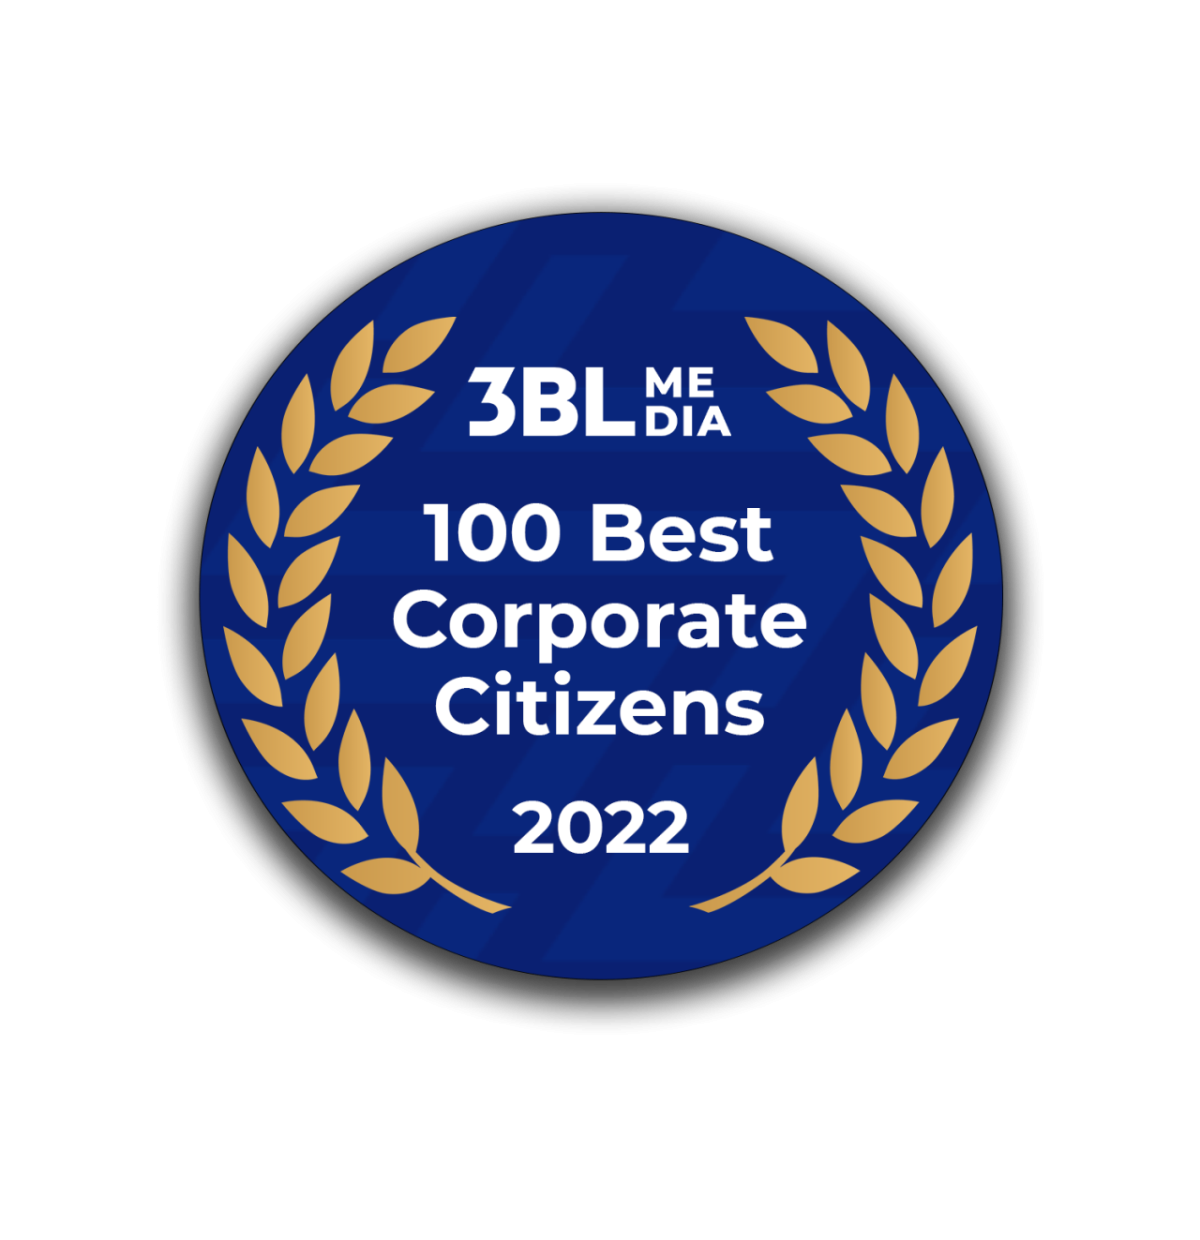 3BL Media Announces 100 Best Corporate Citizens of 2022